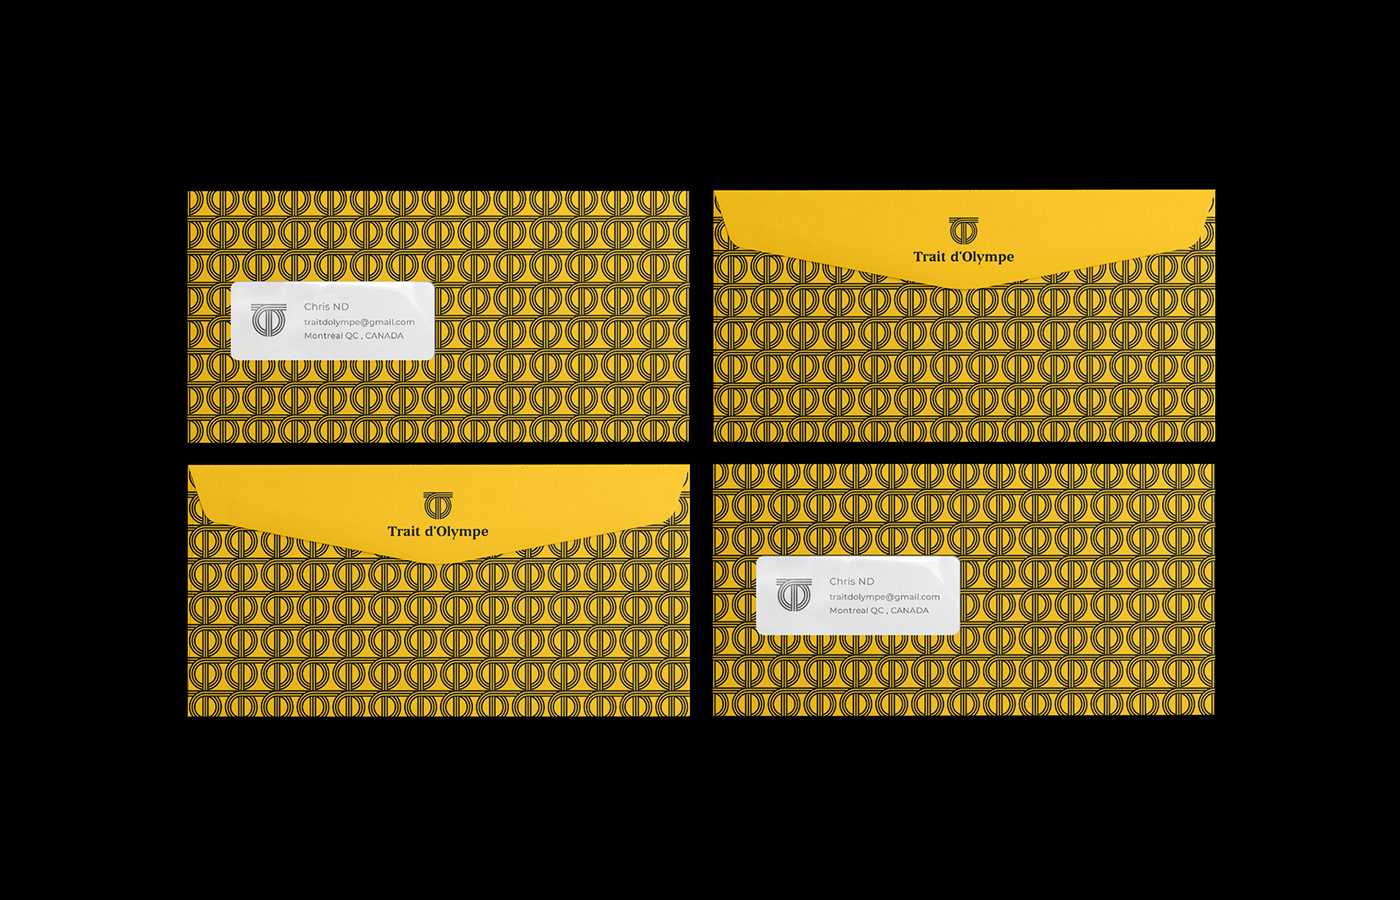 Traid d'Olympe Envelope design